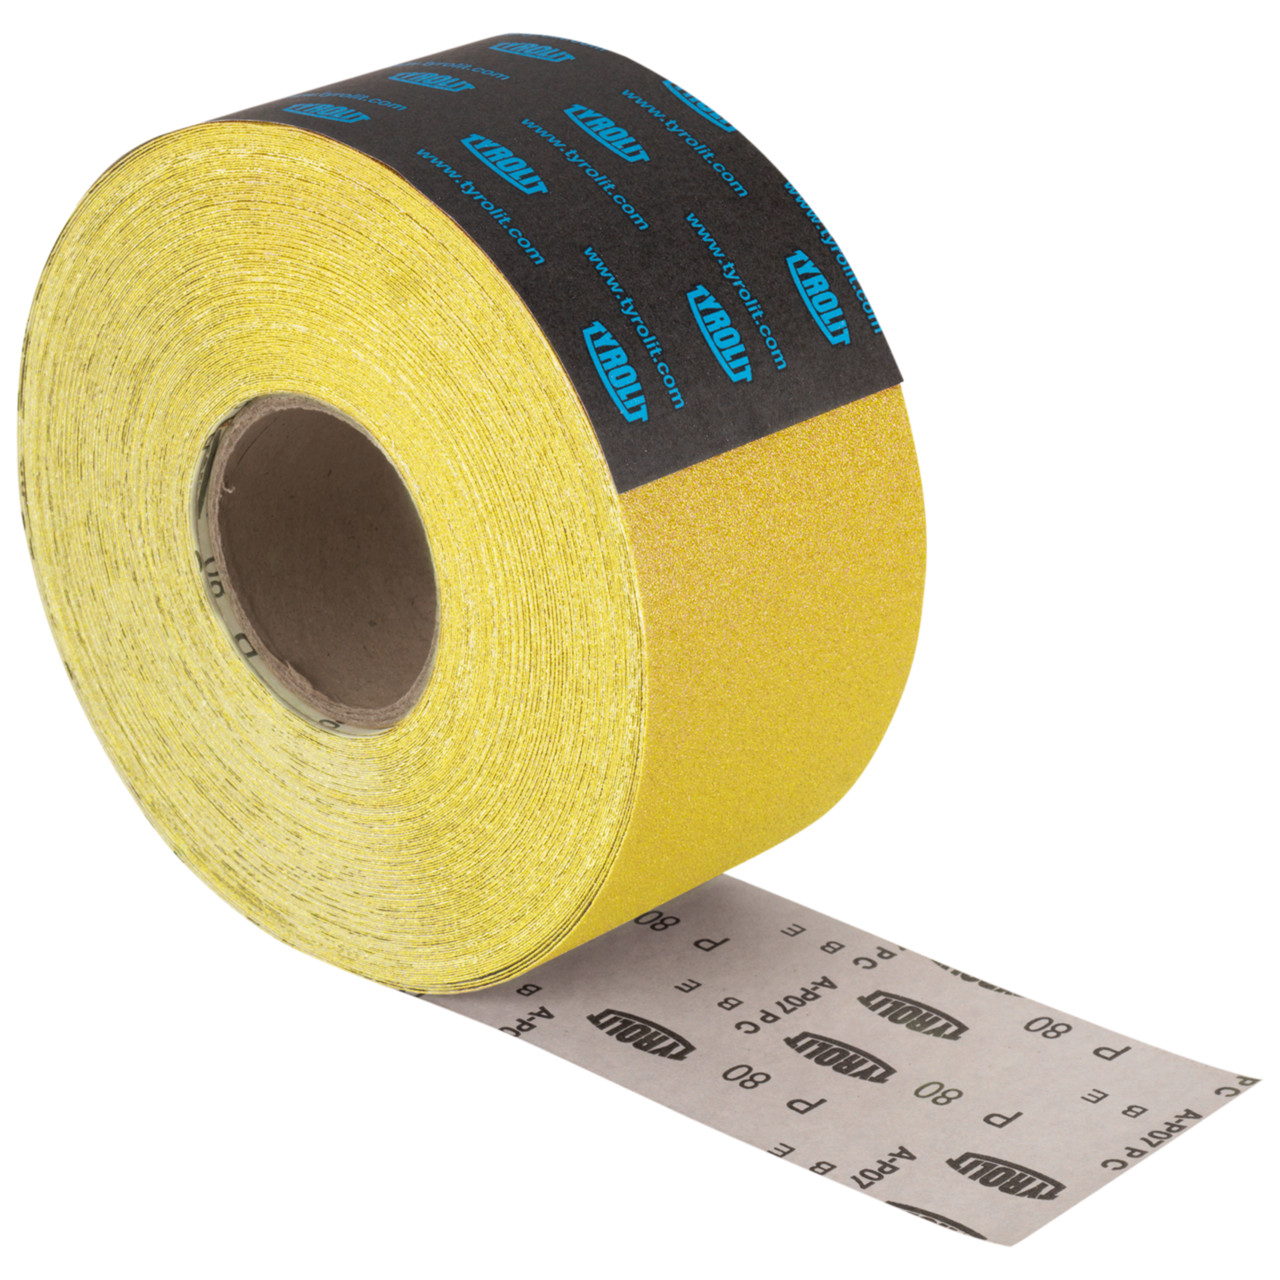 TYROLIT A-P21 D Paper rolls TxH 115x5 For plastic, wood, paint and varnish, P150, shape: ROLL, Art. 34231875